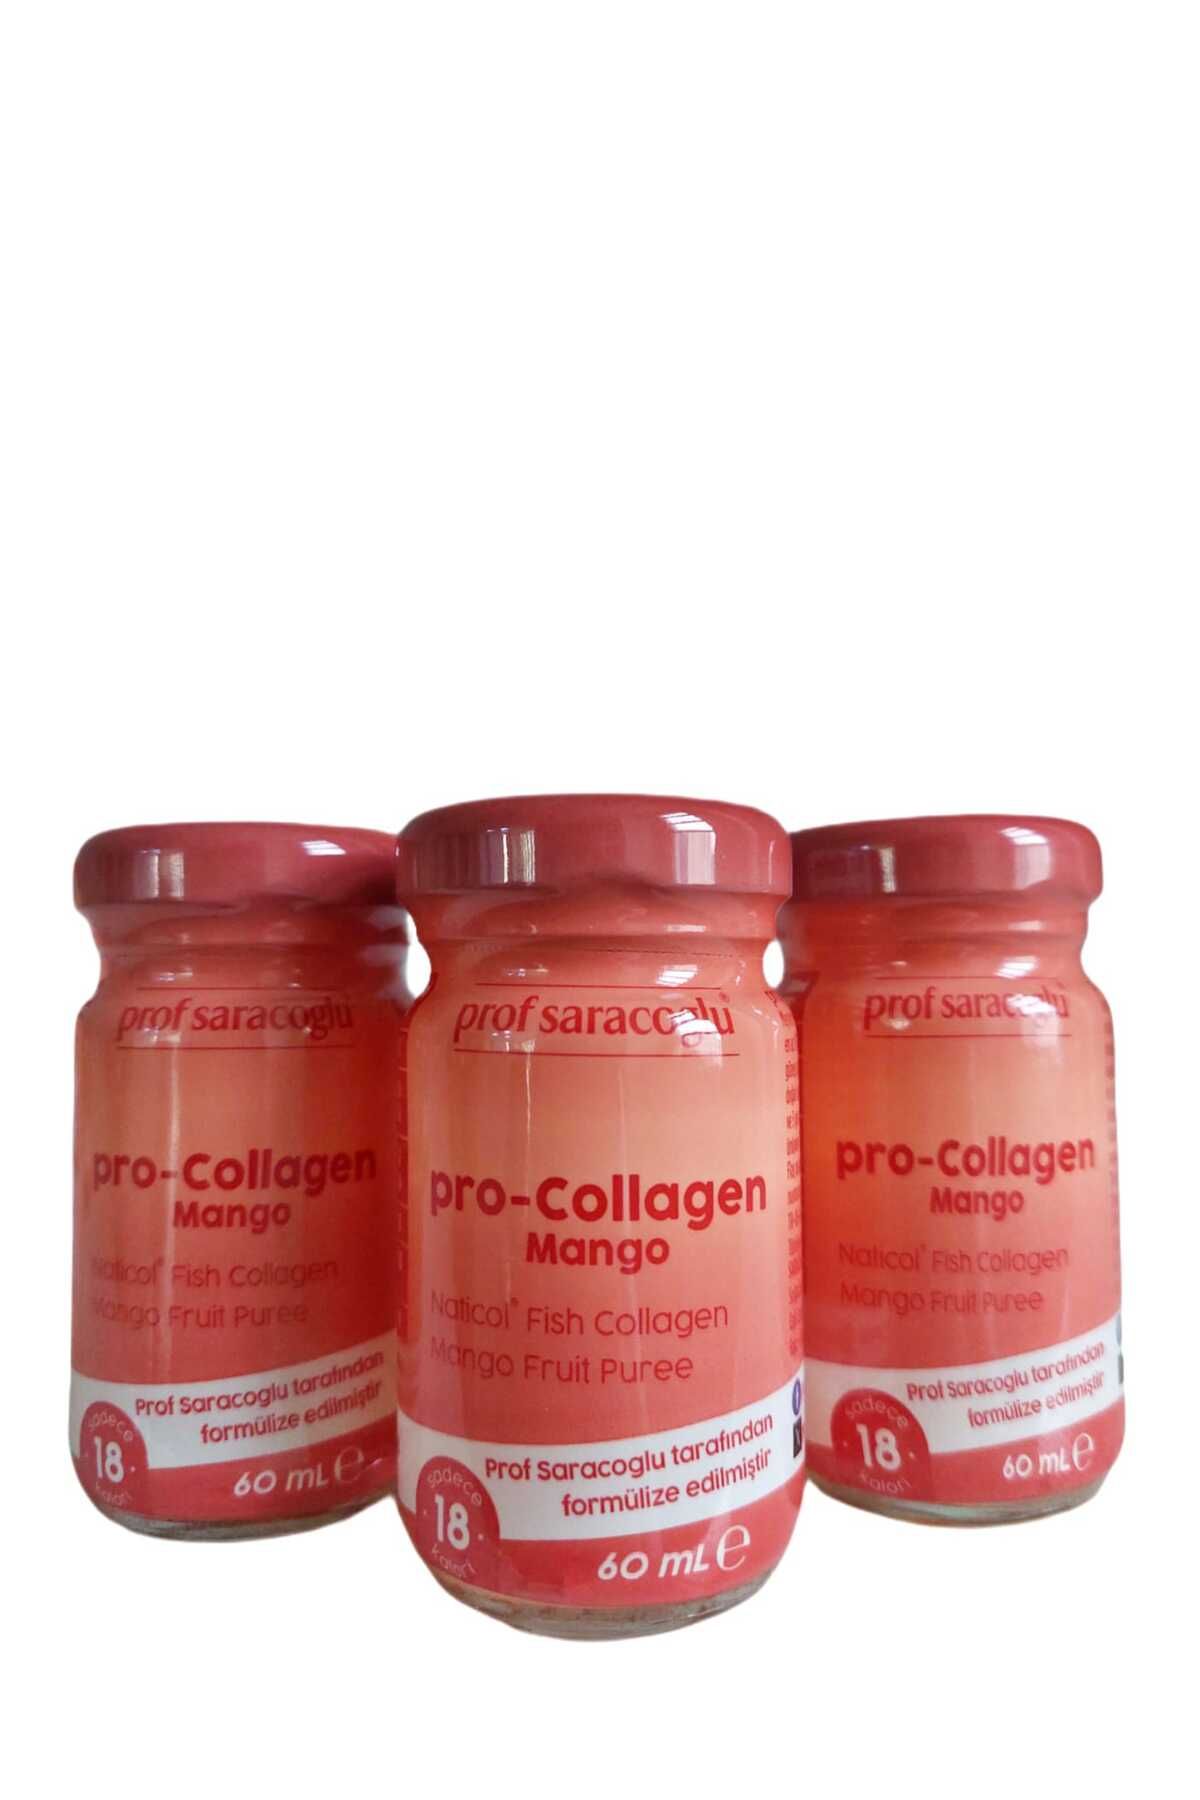 prof saracoglu Pro-Collagen Mango 12 li